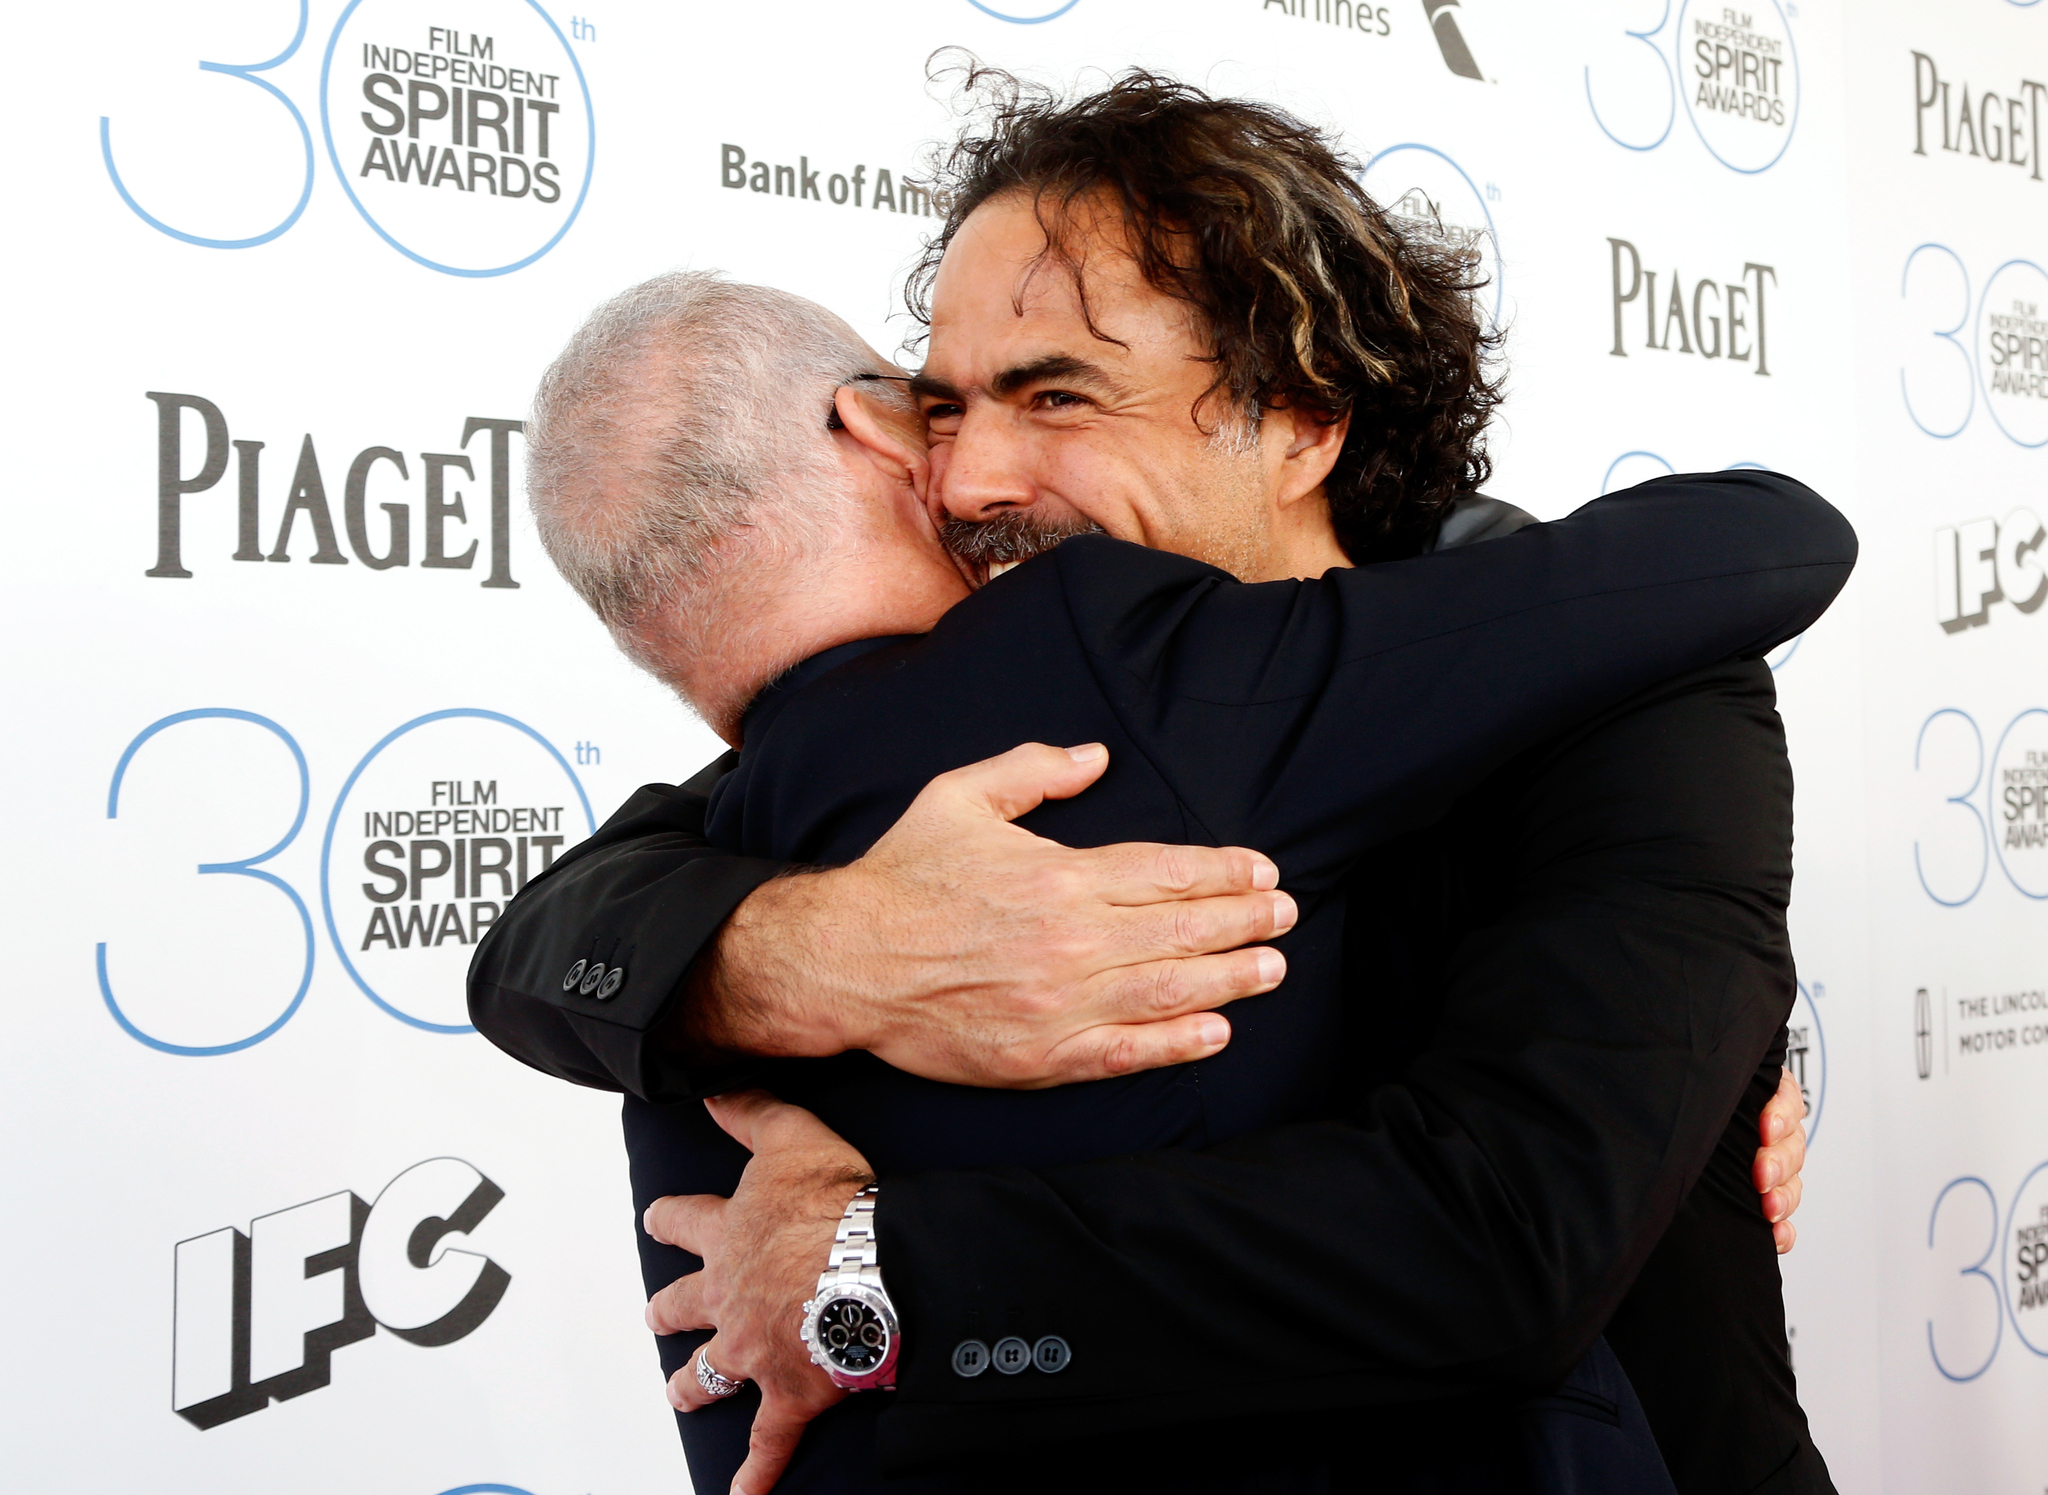 Michael Keaton and Alejandro González Iñárritu at event of 30th Annual Film Independent Spirit Awards (2015)